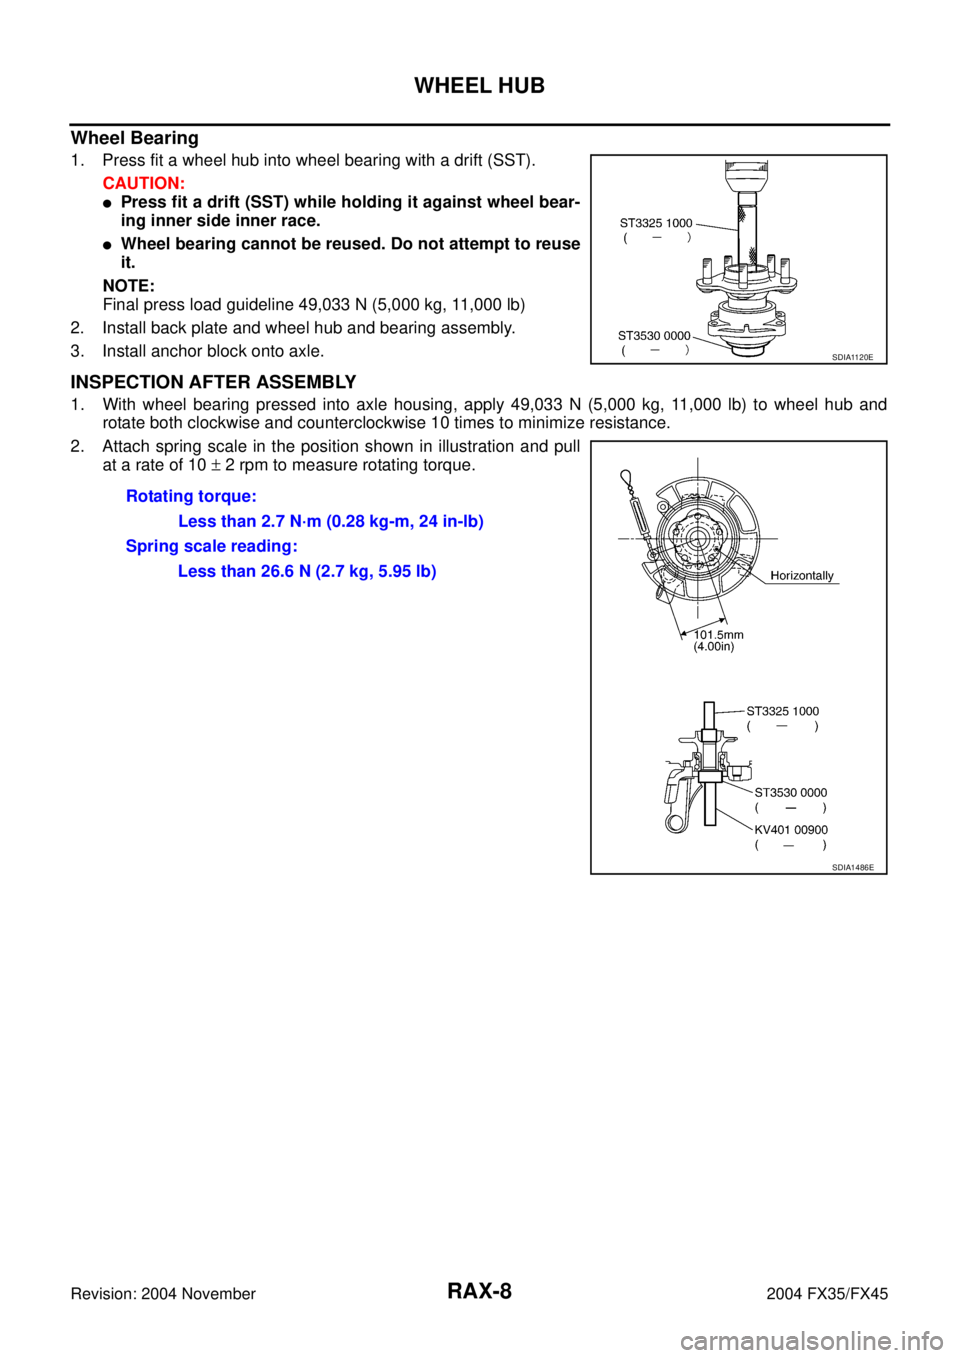 INFINITI FX35 2004  Service Manual RAX-8
WHEEL HUB
Revision: 2004 November 2004 FX35/FX45
Wheel Bearing
1. Press fit a wheel hub into wheel bearing with a drift (SST). 
CAUTION:
Press fit a drift (SST) while holding it against wheel b